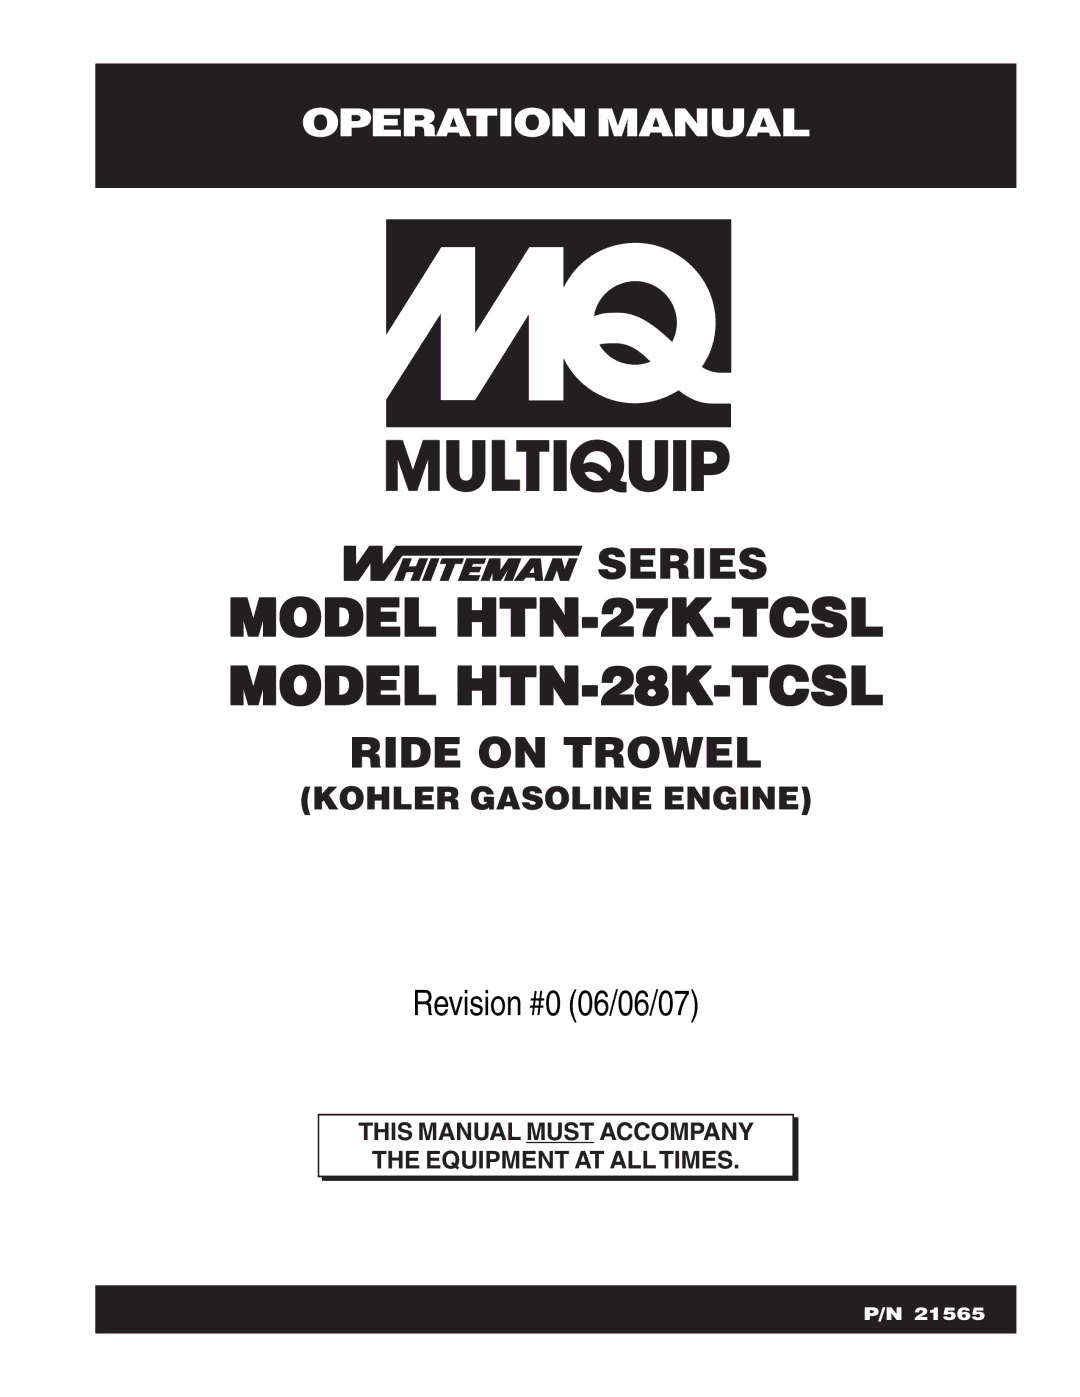 Multiquip operation manual Model HTN-27K-TCSL Model HTN-28K-TCSL 